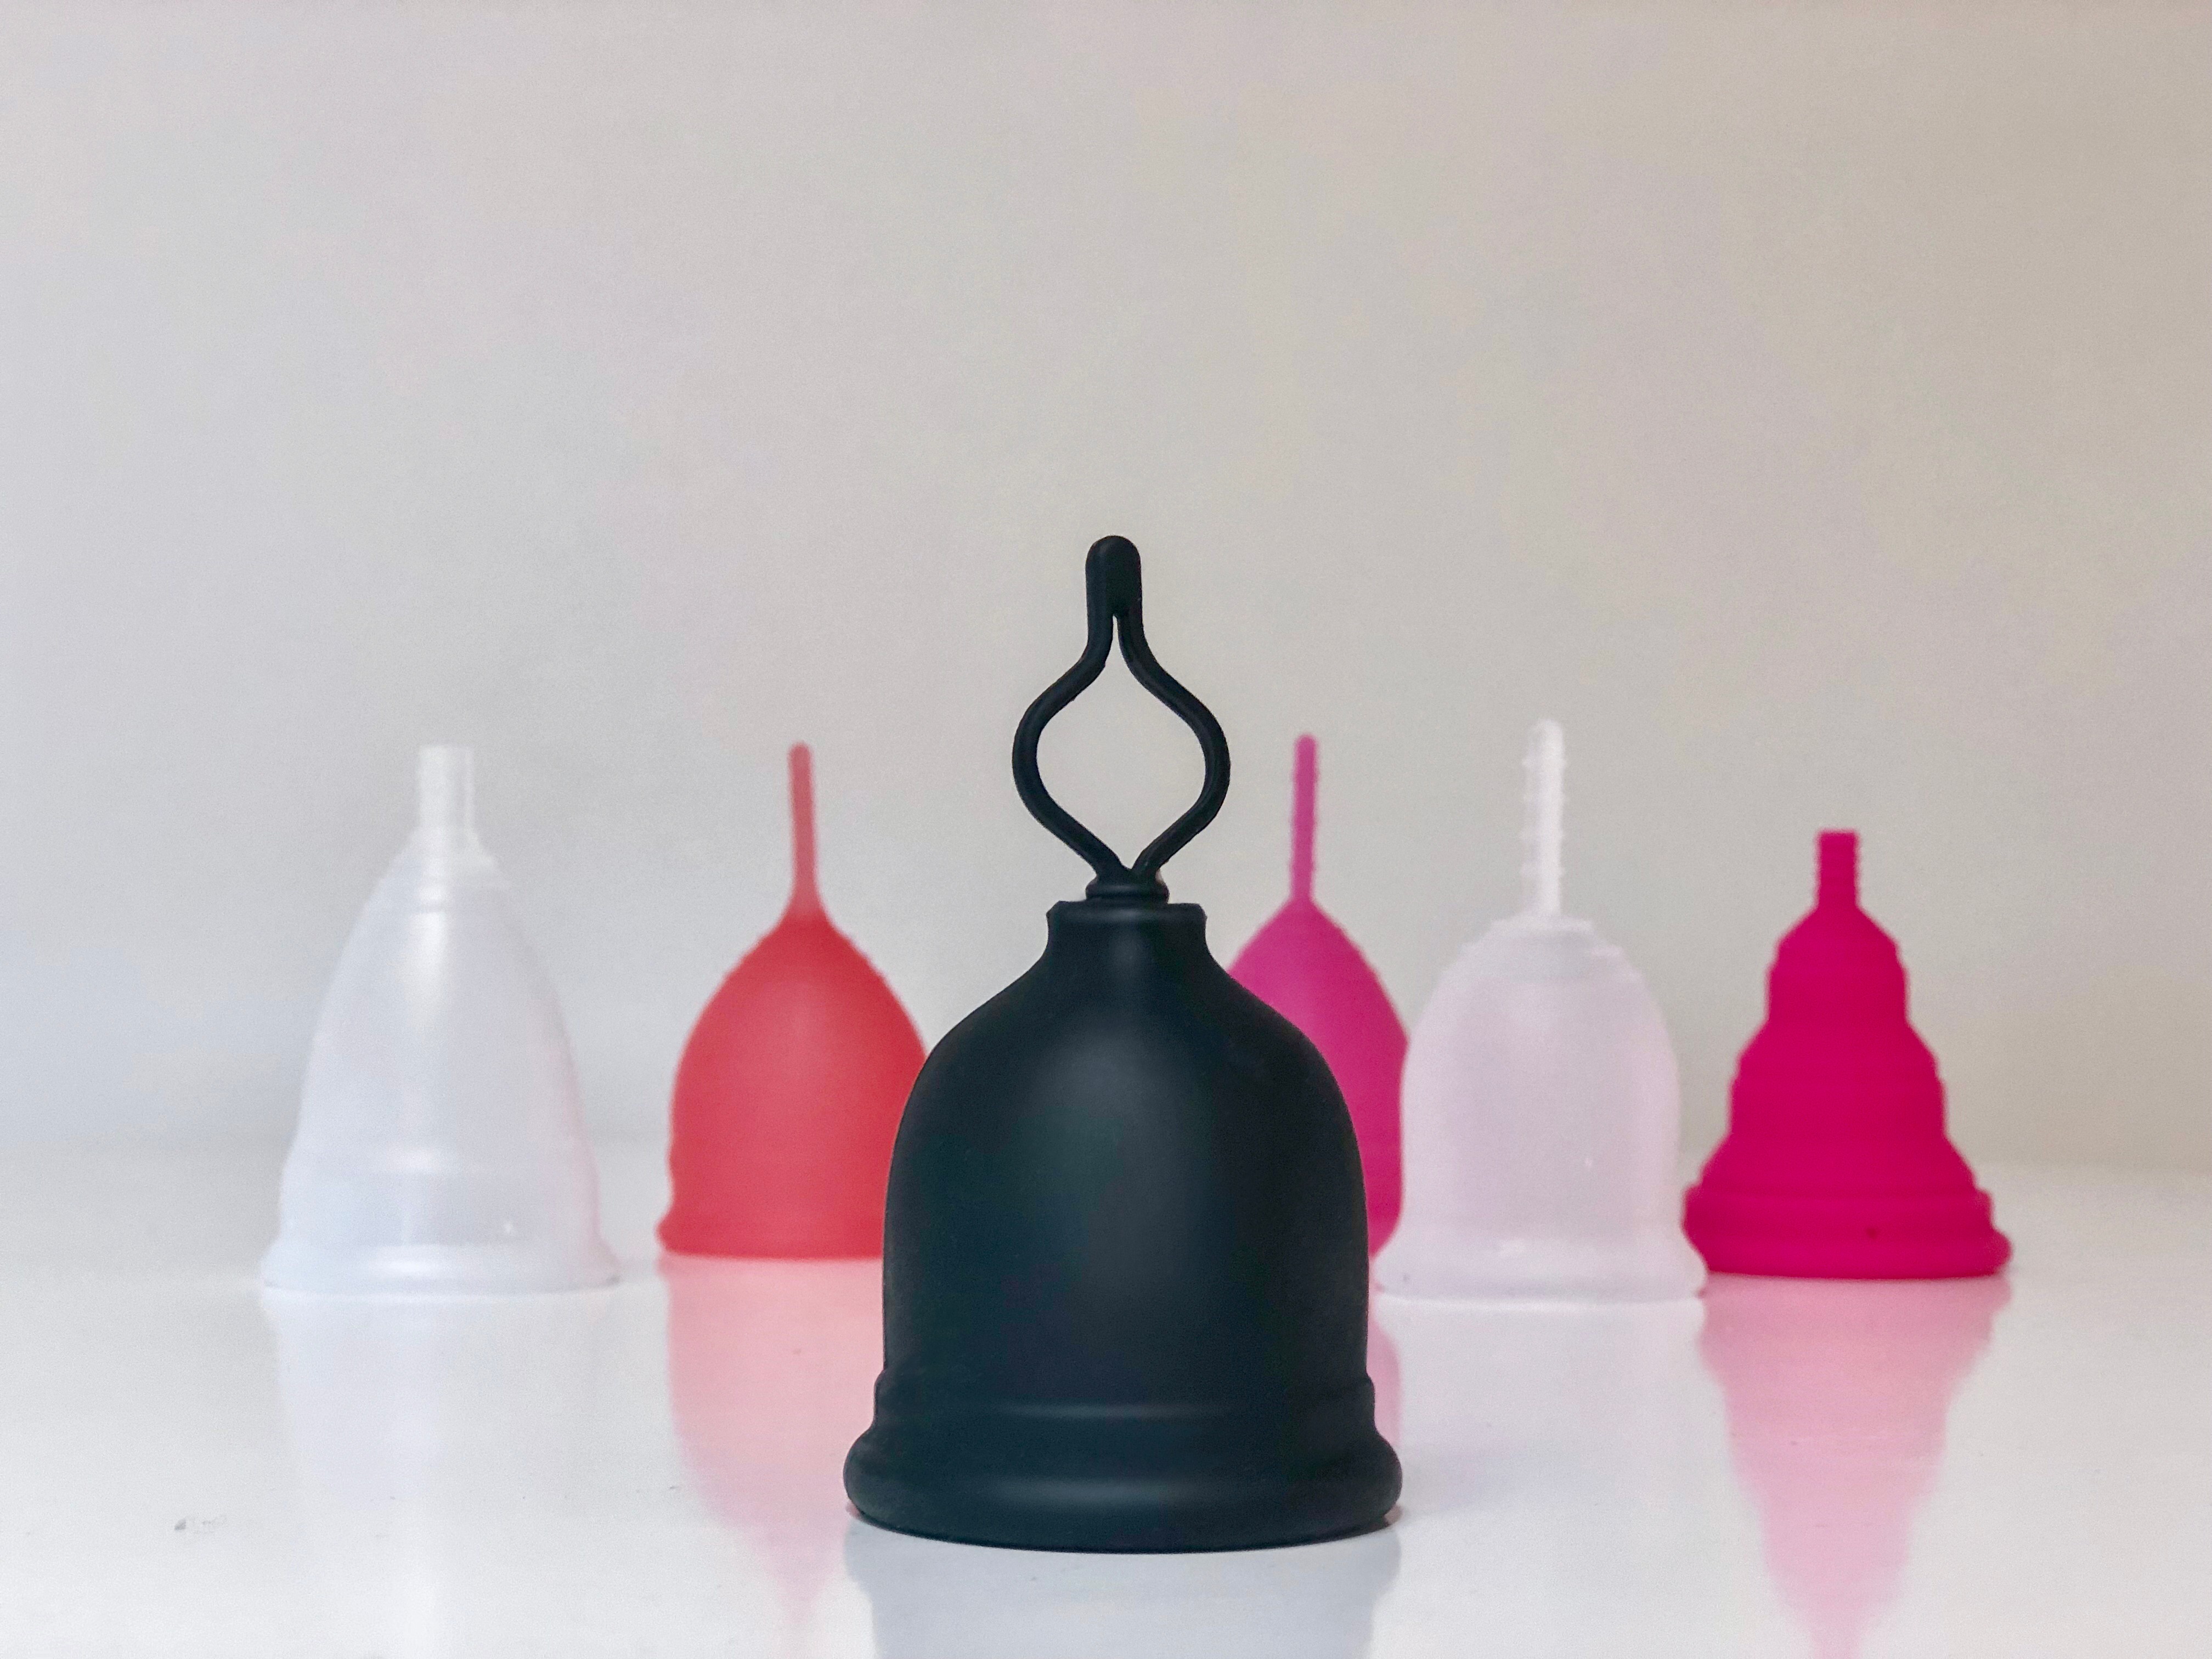 FLEX ® Menstrual Cup (Originally the Keela Cup) – Full Review